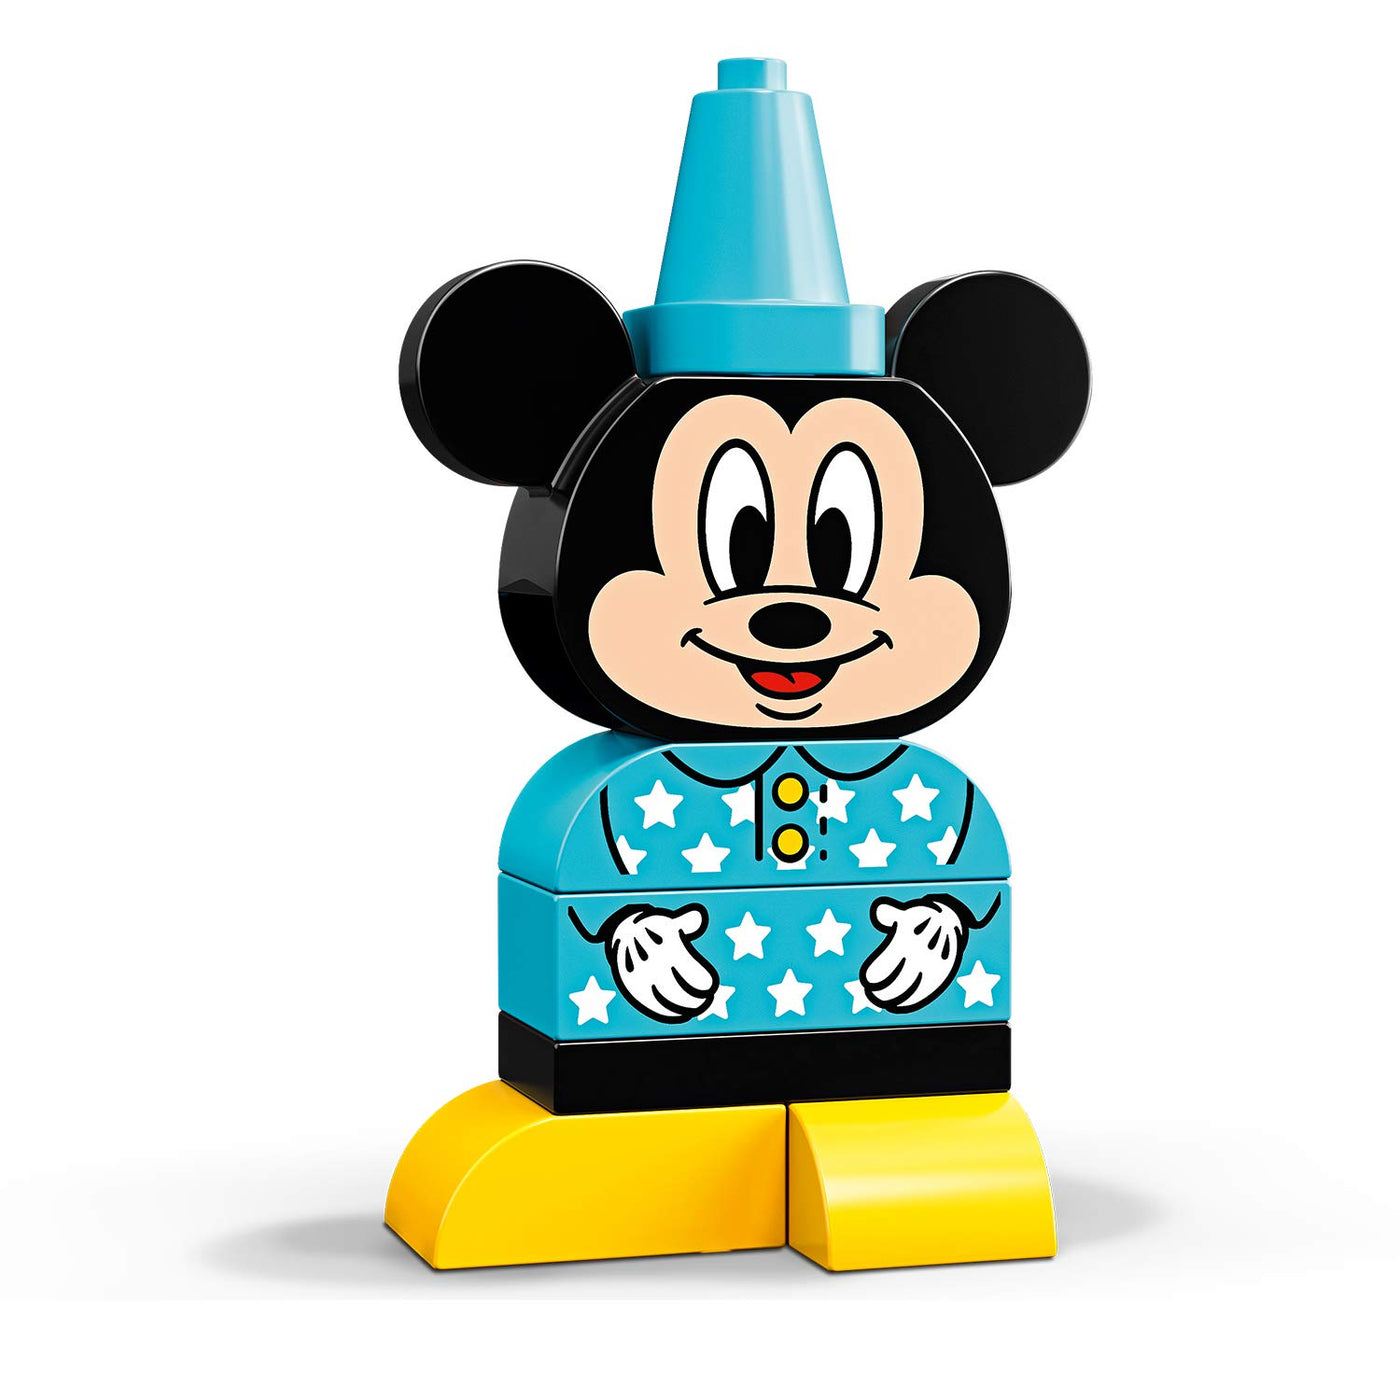 LEGO DUPLO My First Mickey Build, 10898